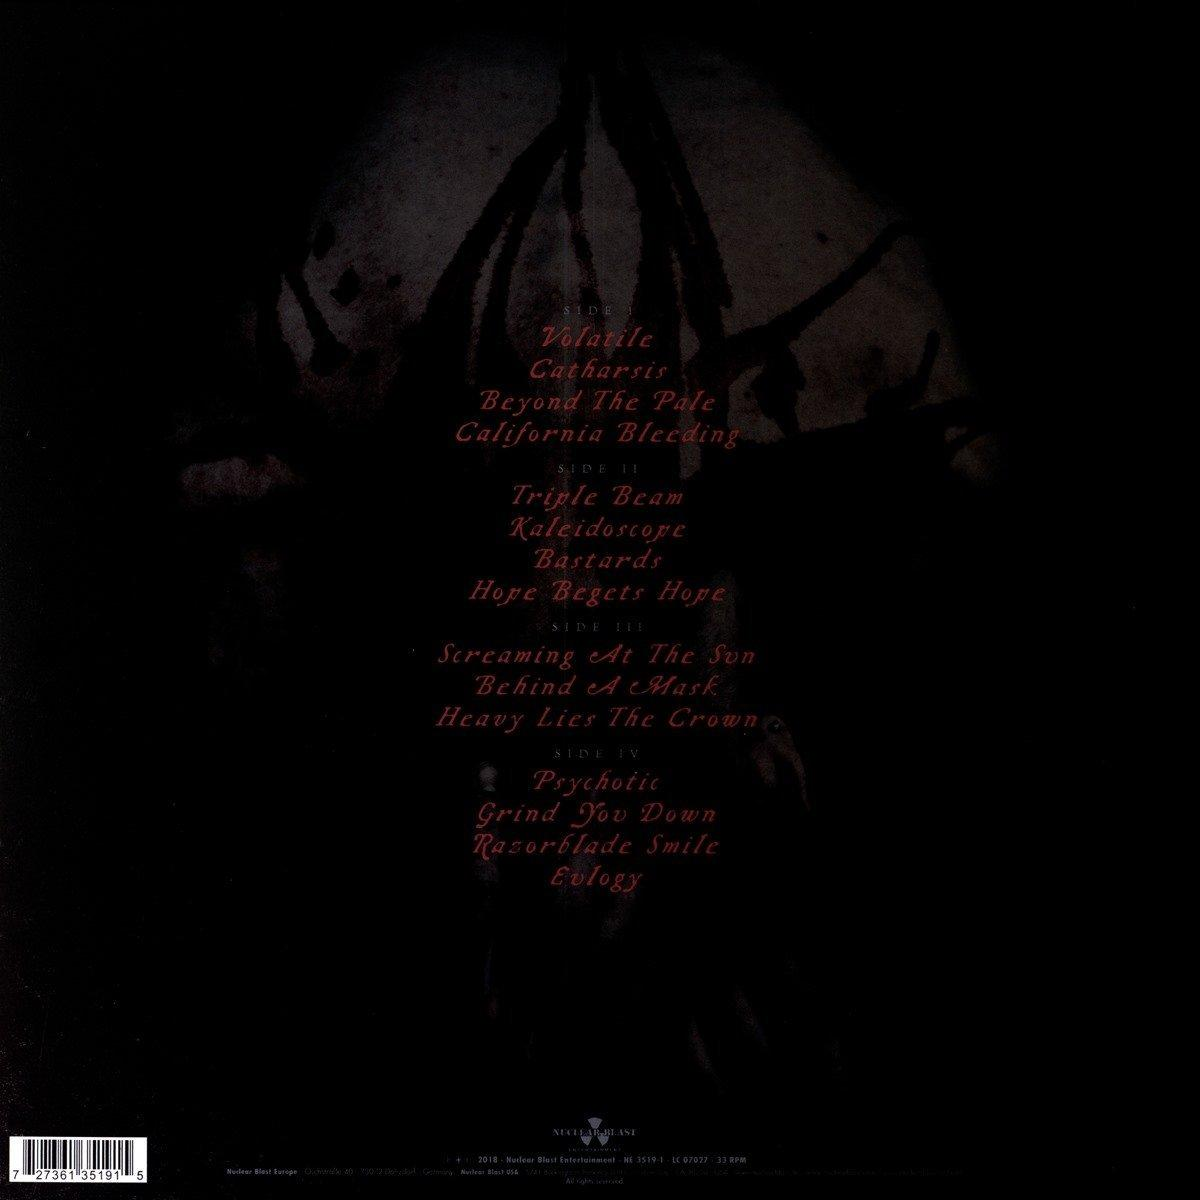 Machine Head - Catharsis - (Vinyl)